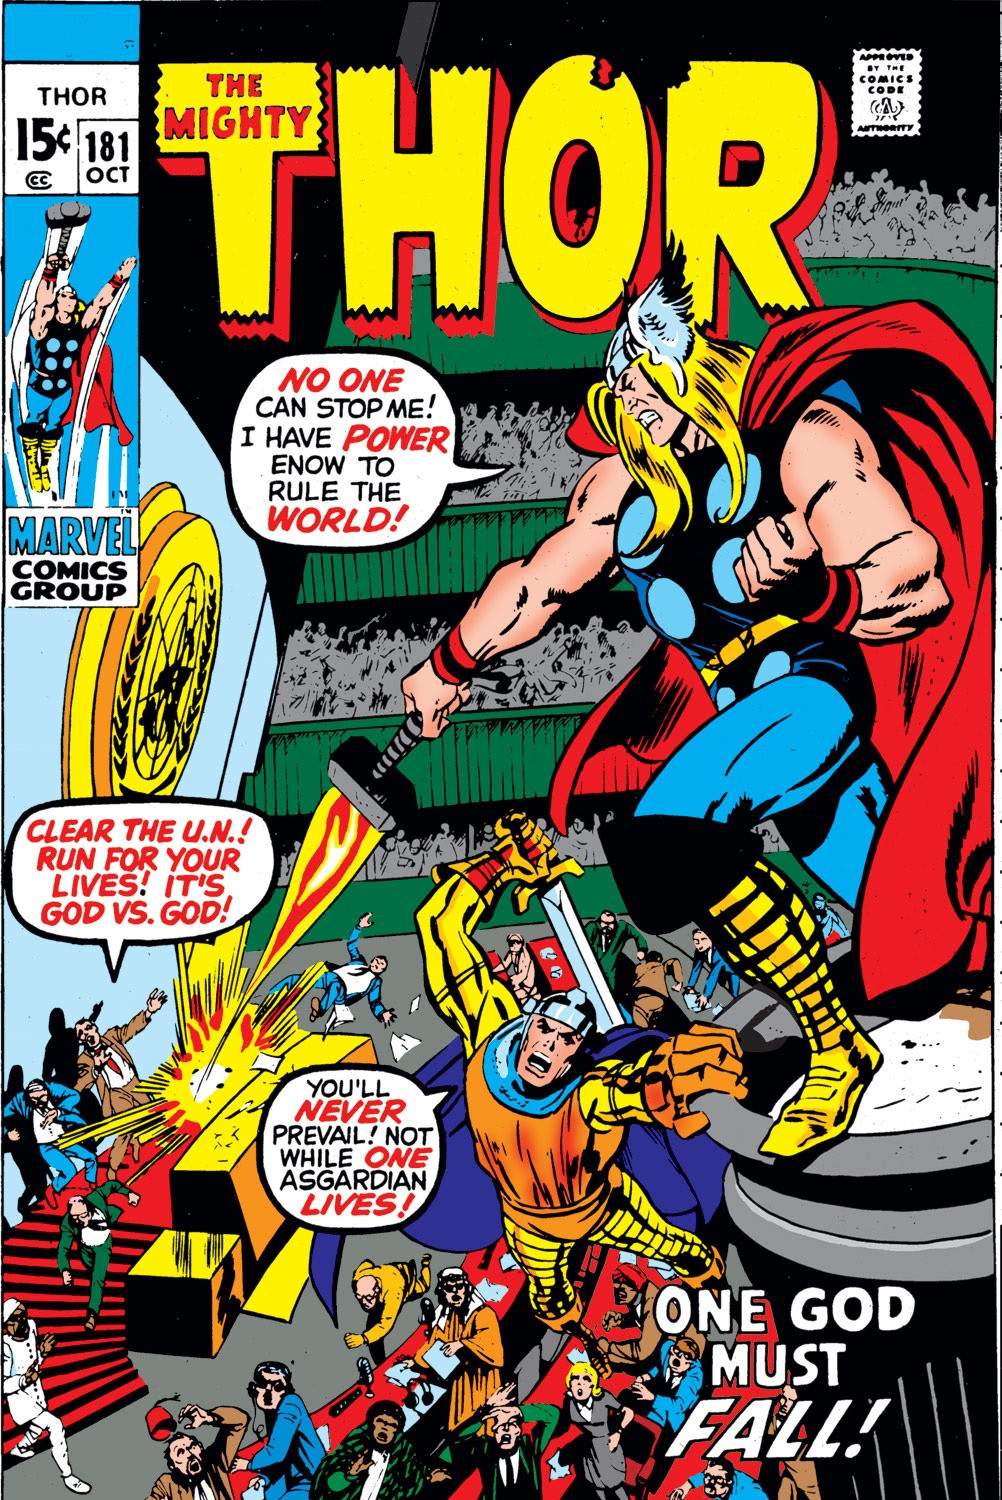 Thor Vol 1 181 | Marvel Database | Fandom